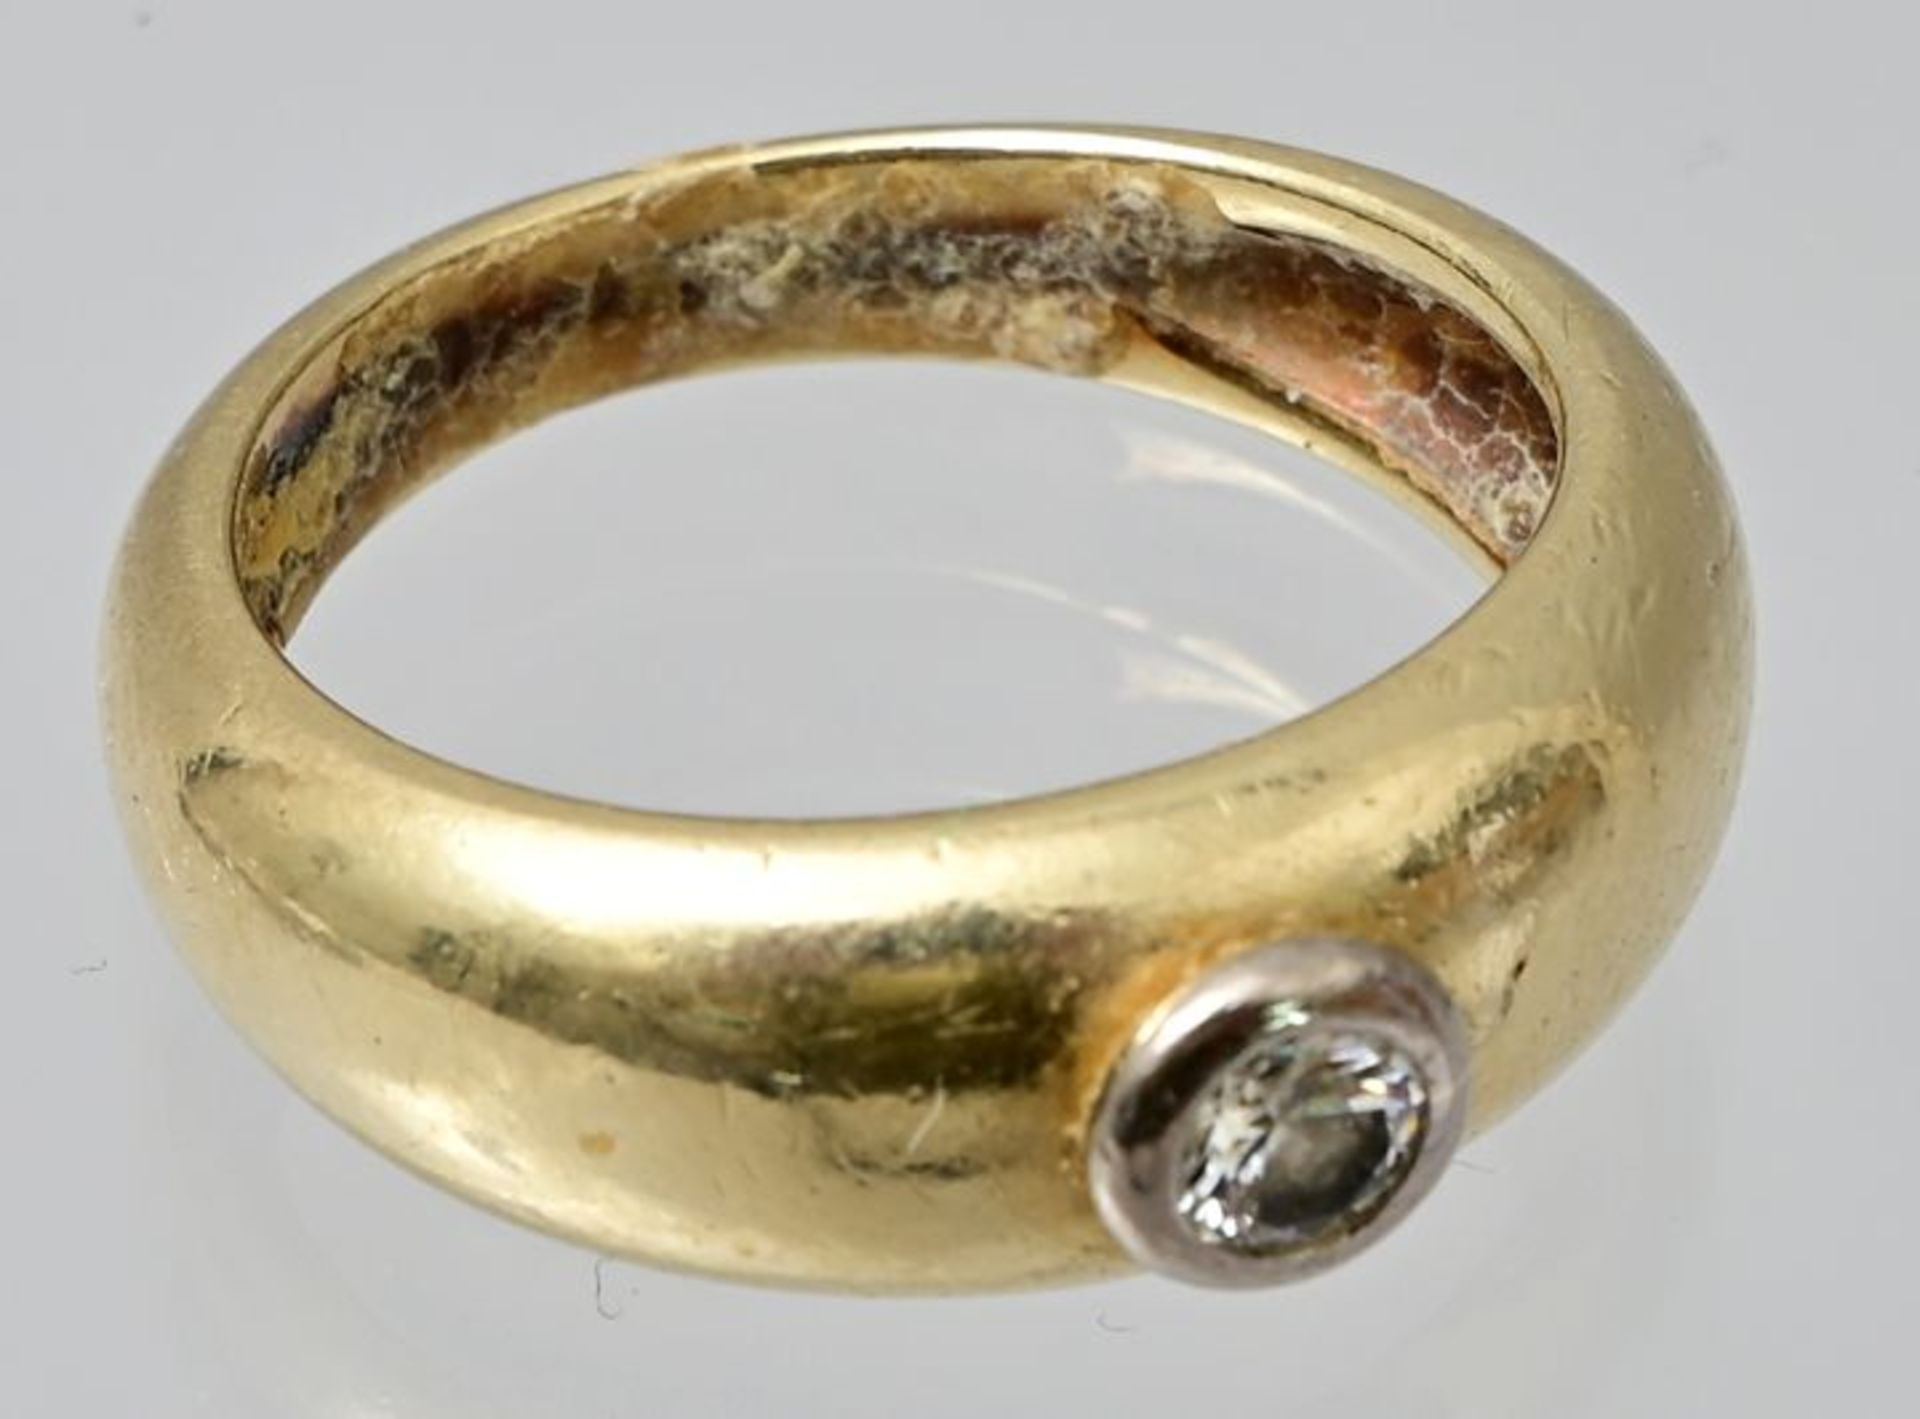 Goldring mit Solitär/ ring with diamond